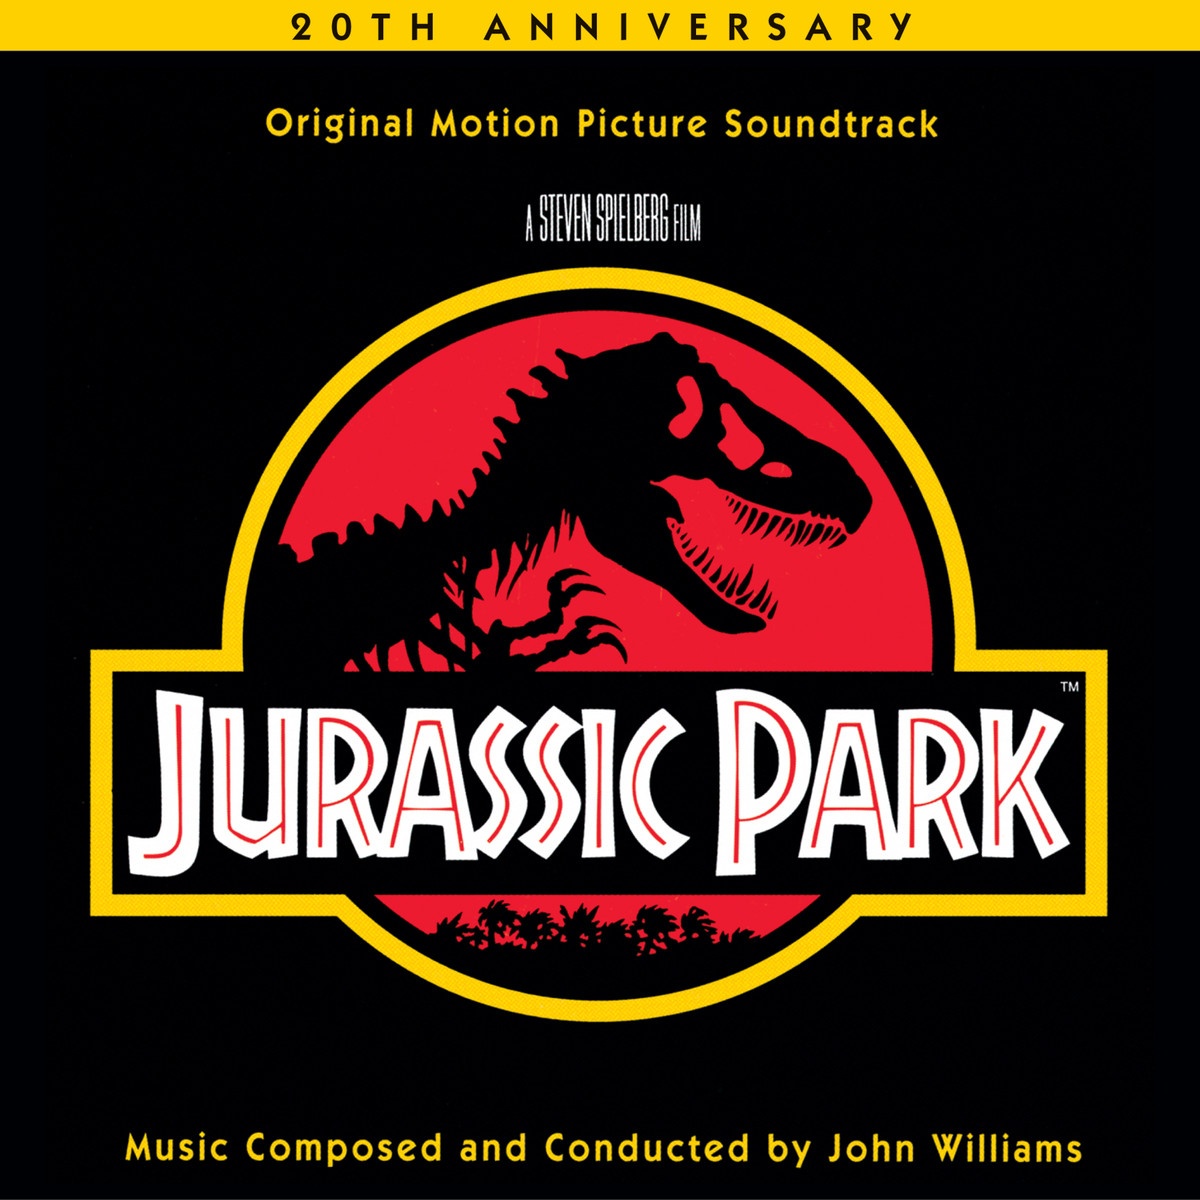 End Credits - Jurassic Park/Soundtrack Version